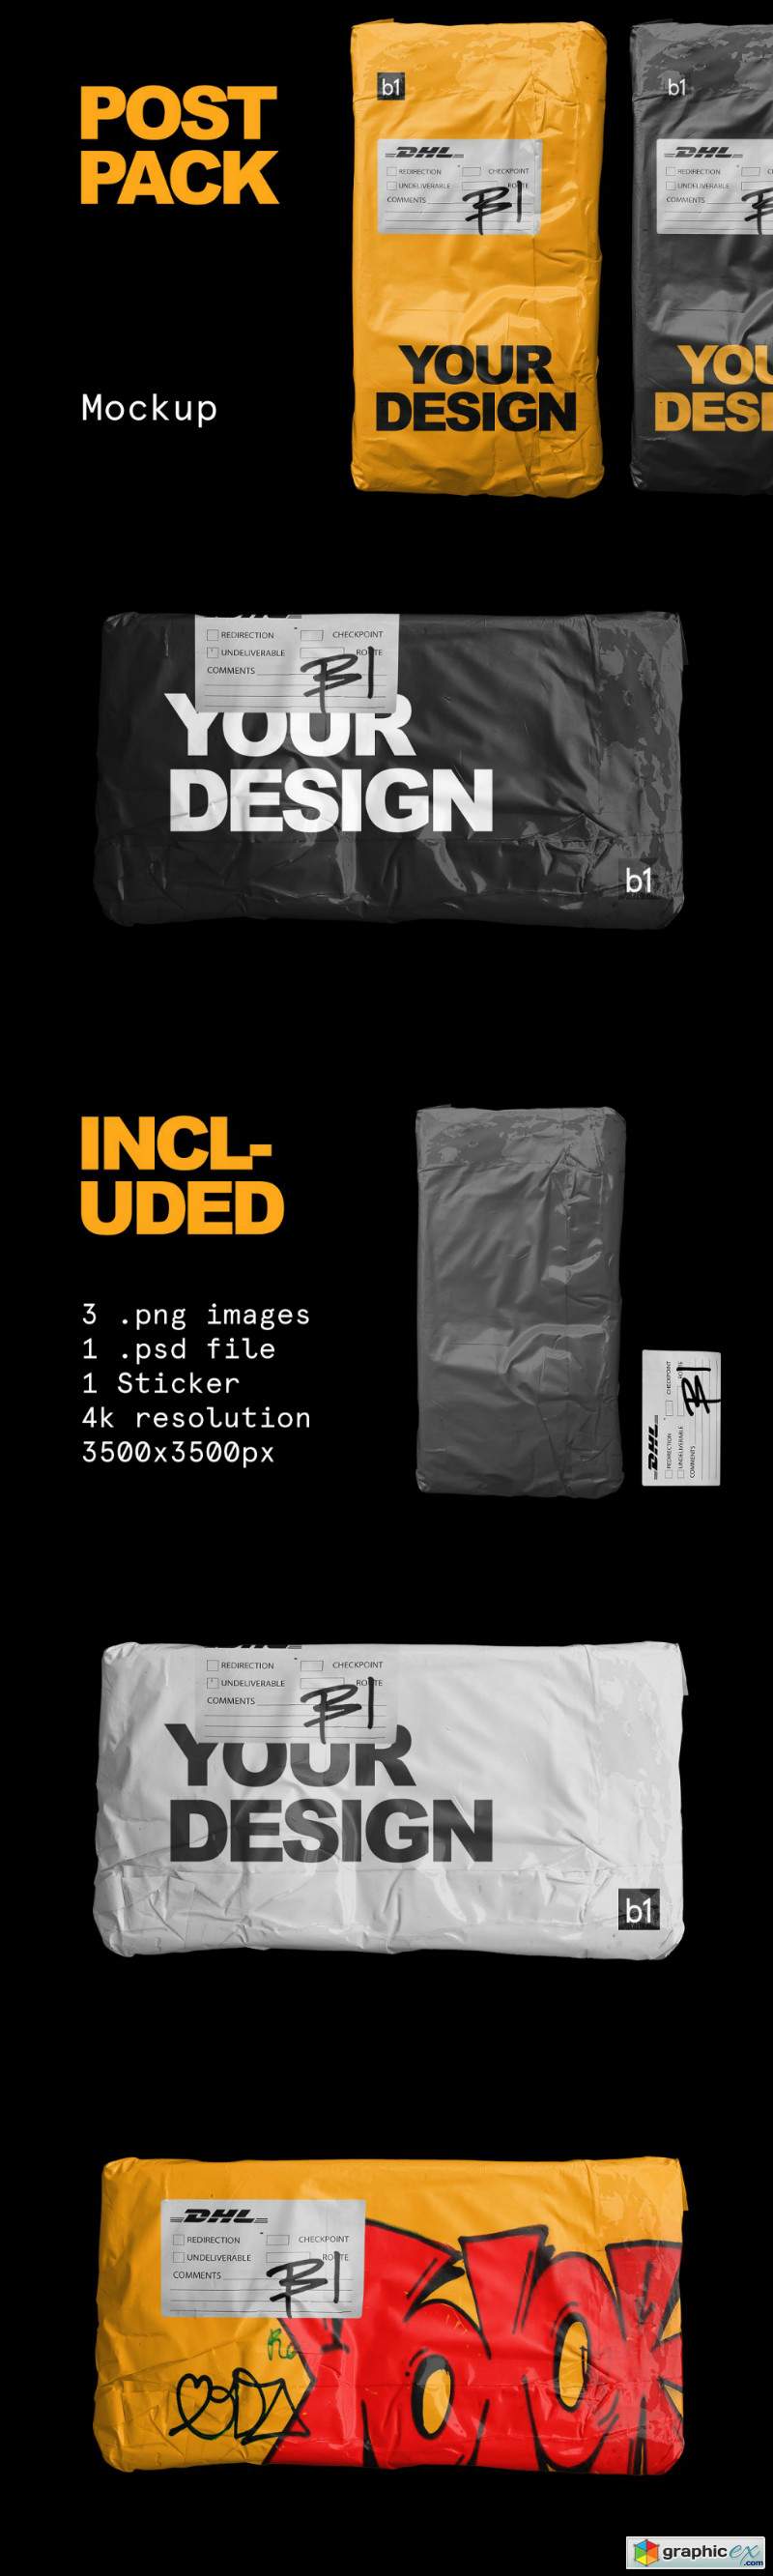 Post Pack Bag Mockup